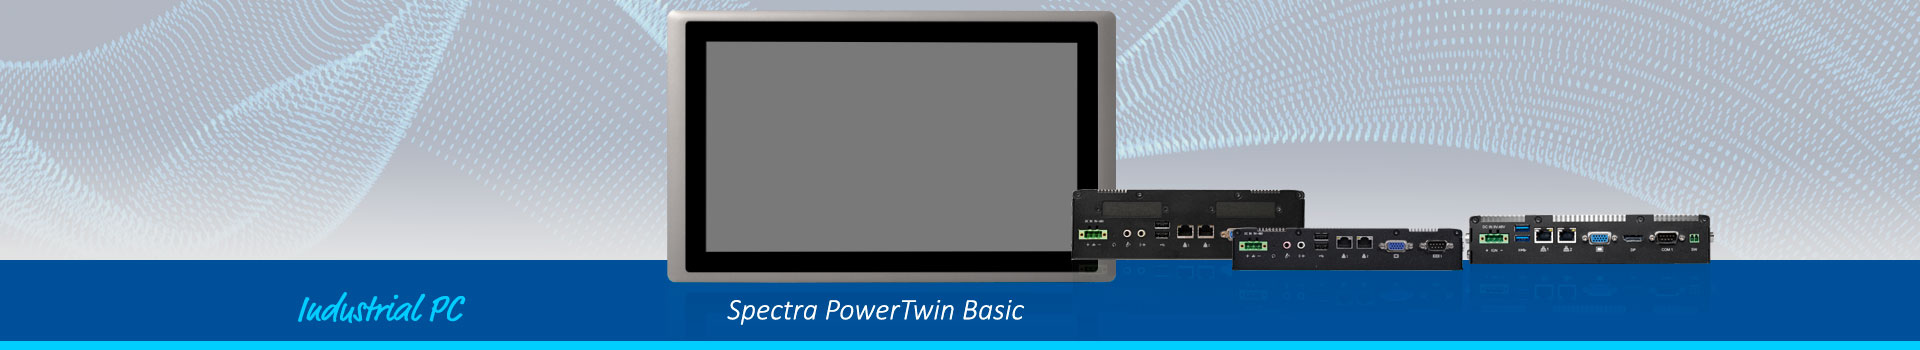 Banner Panel PC PowerTwin Basic